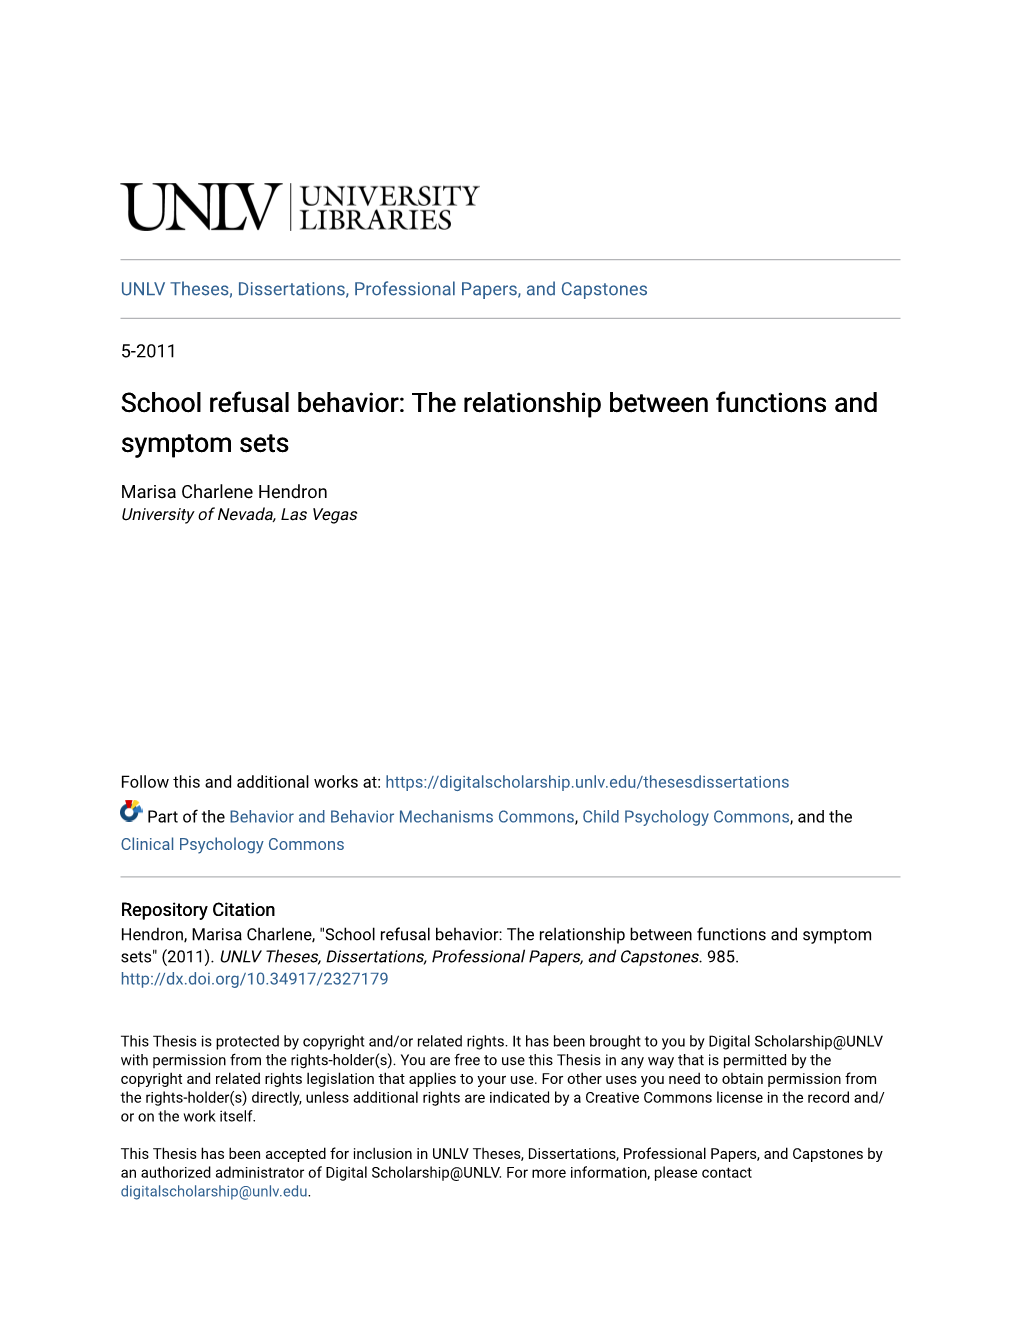 School Refusal Behavior: the Relationship Between Functions and Symptom Sets